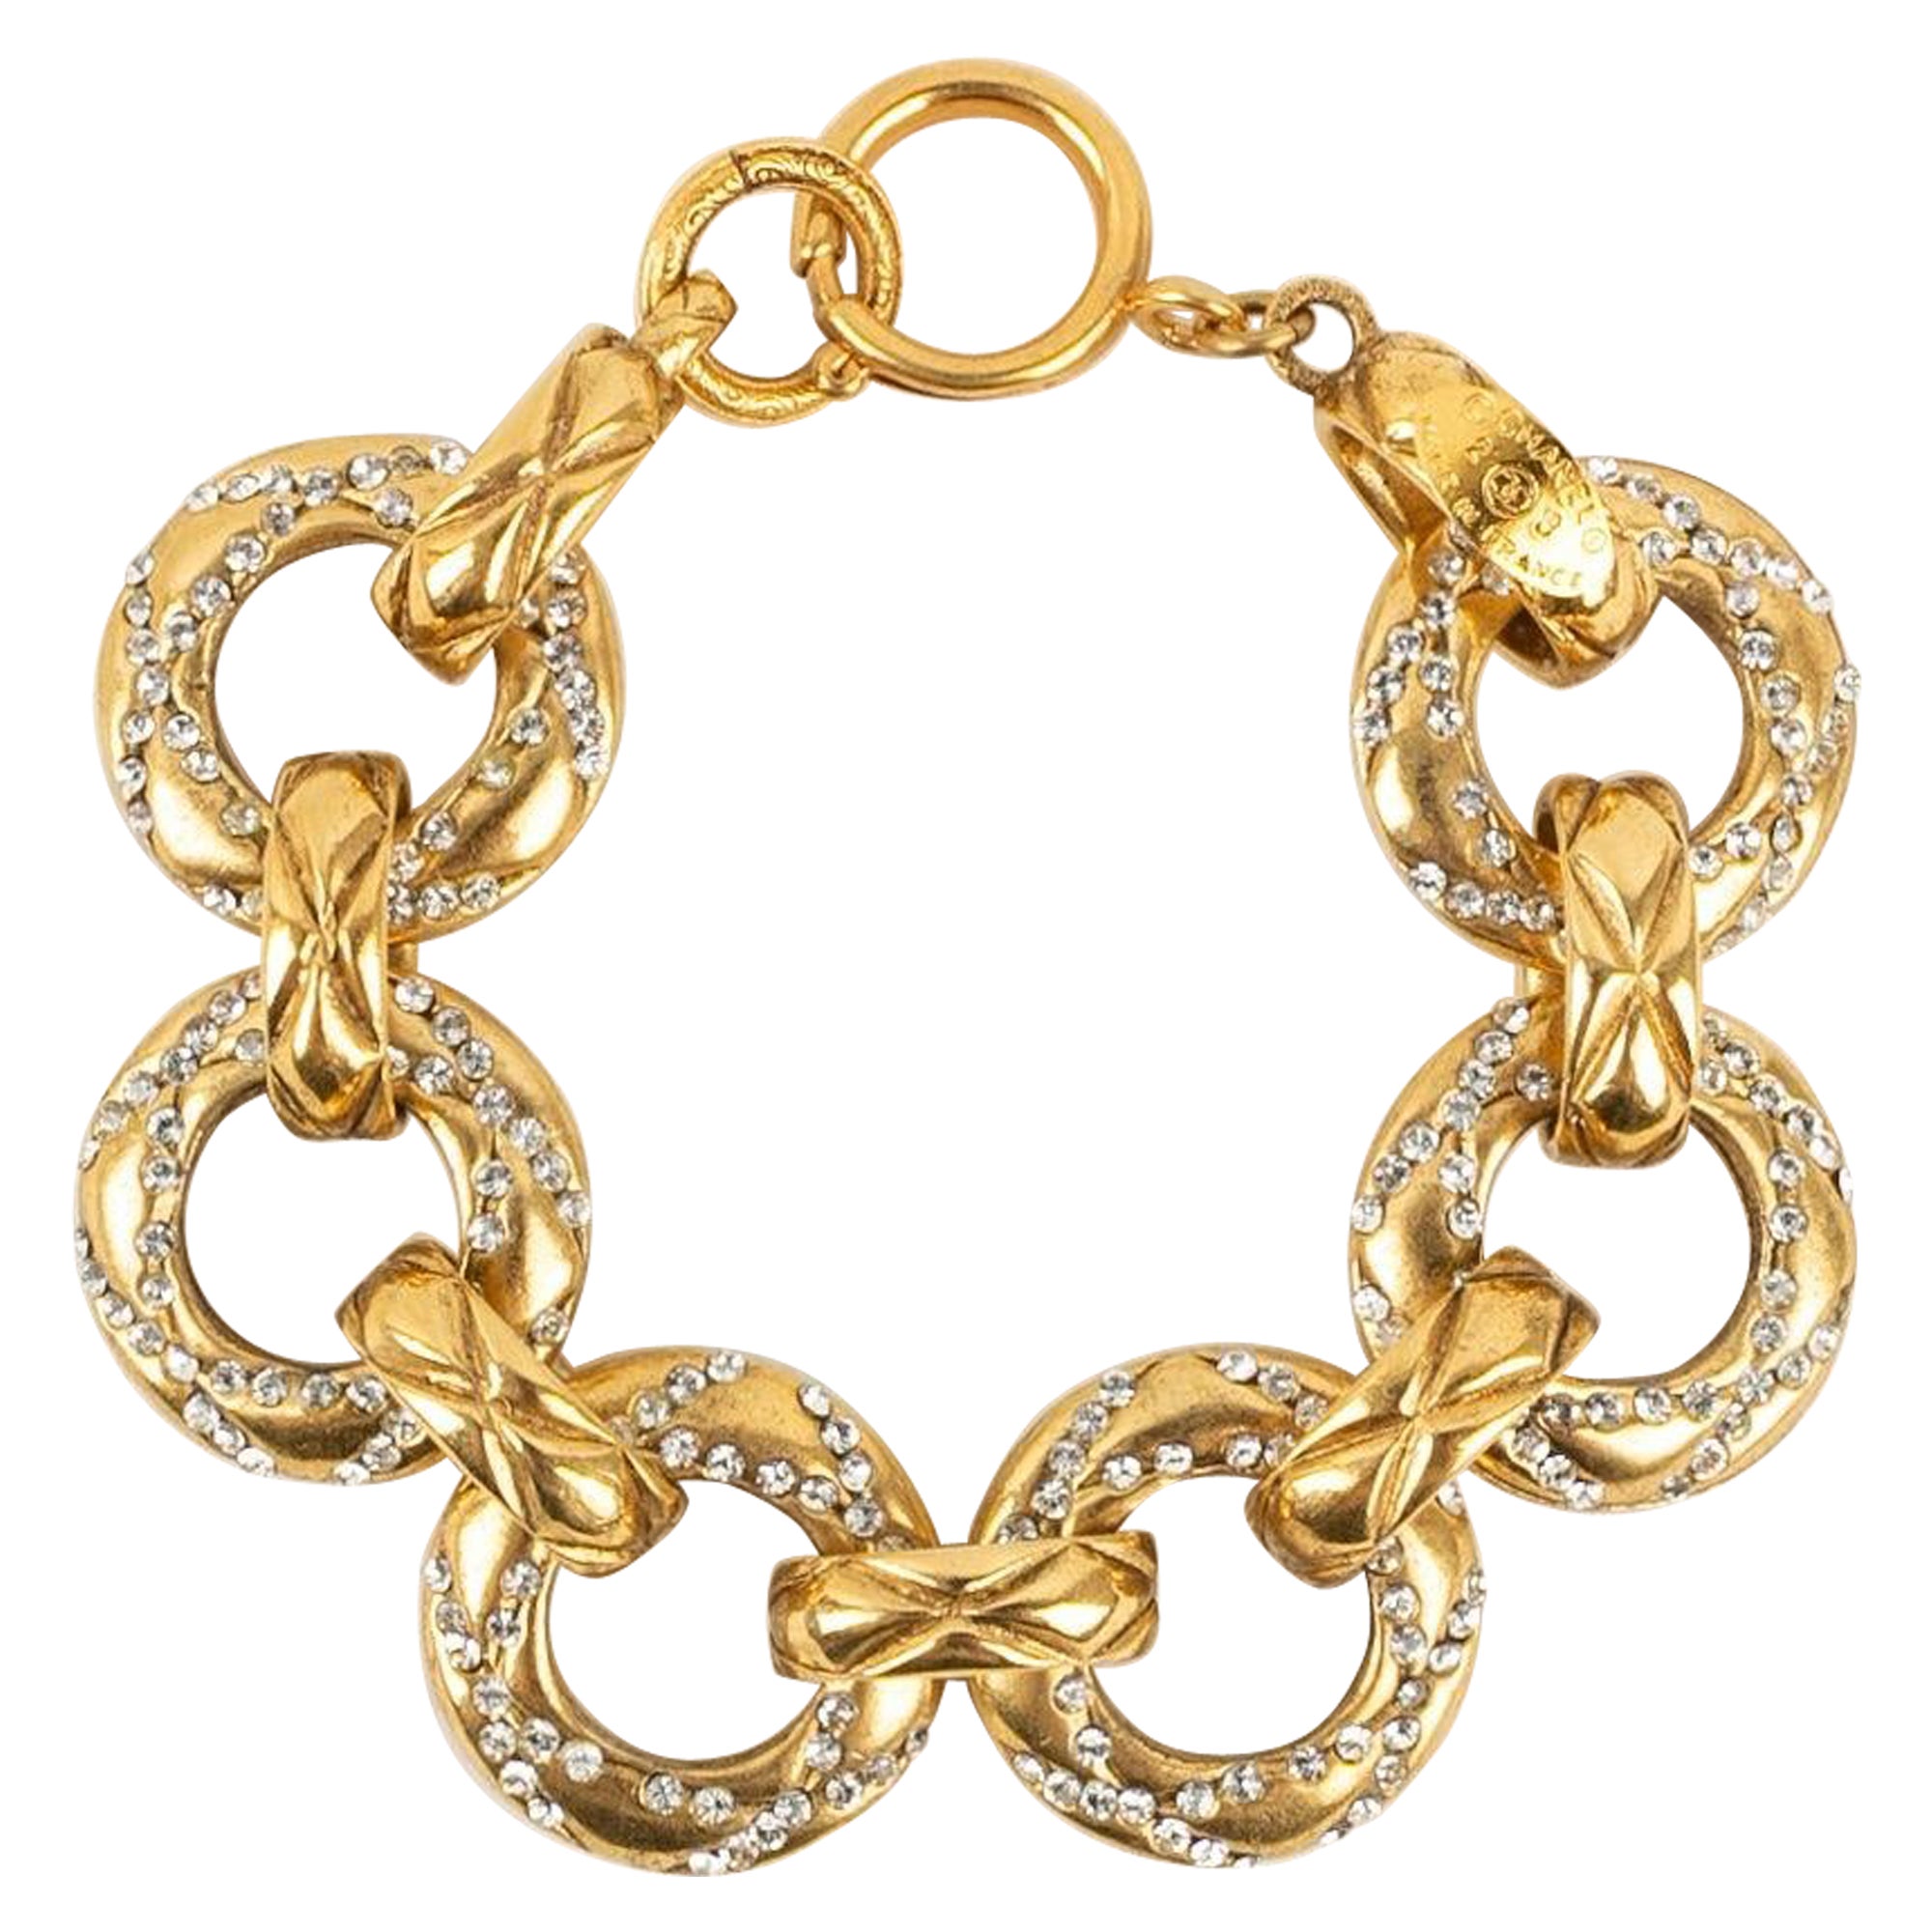 Chanel Golden Bracelet in Golden Metal with Swarovski Rhinestones, 2003